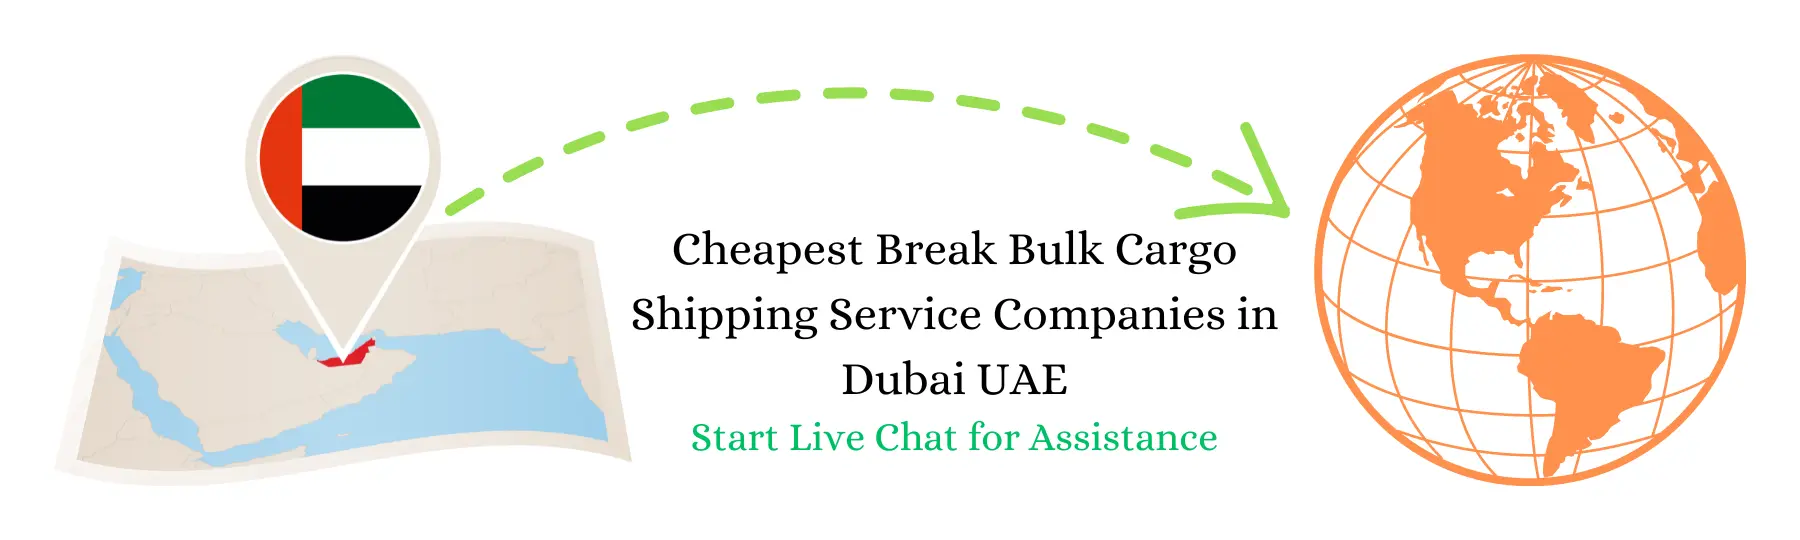 Break Bulk Cargo Shipping Service Companies in Dubai UAE